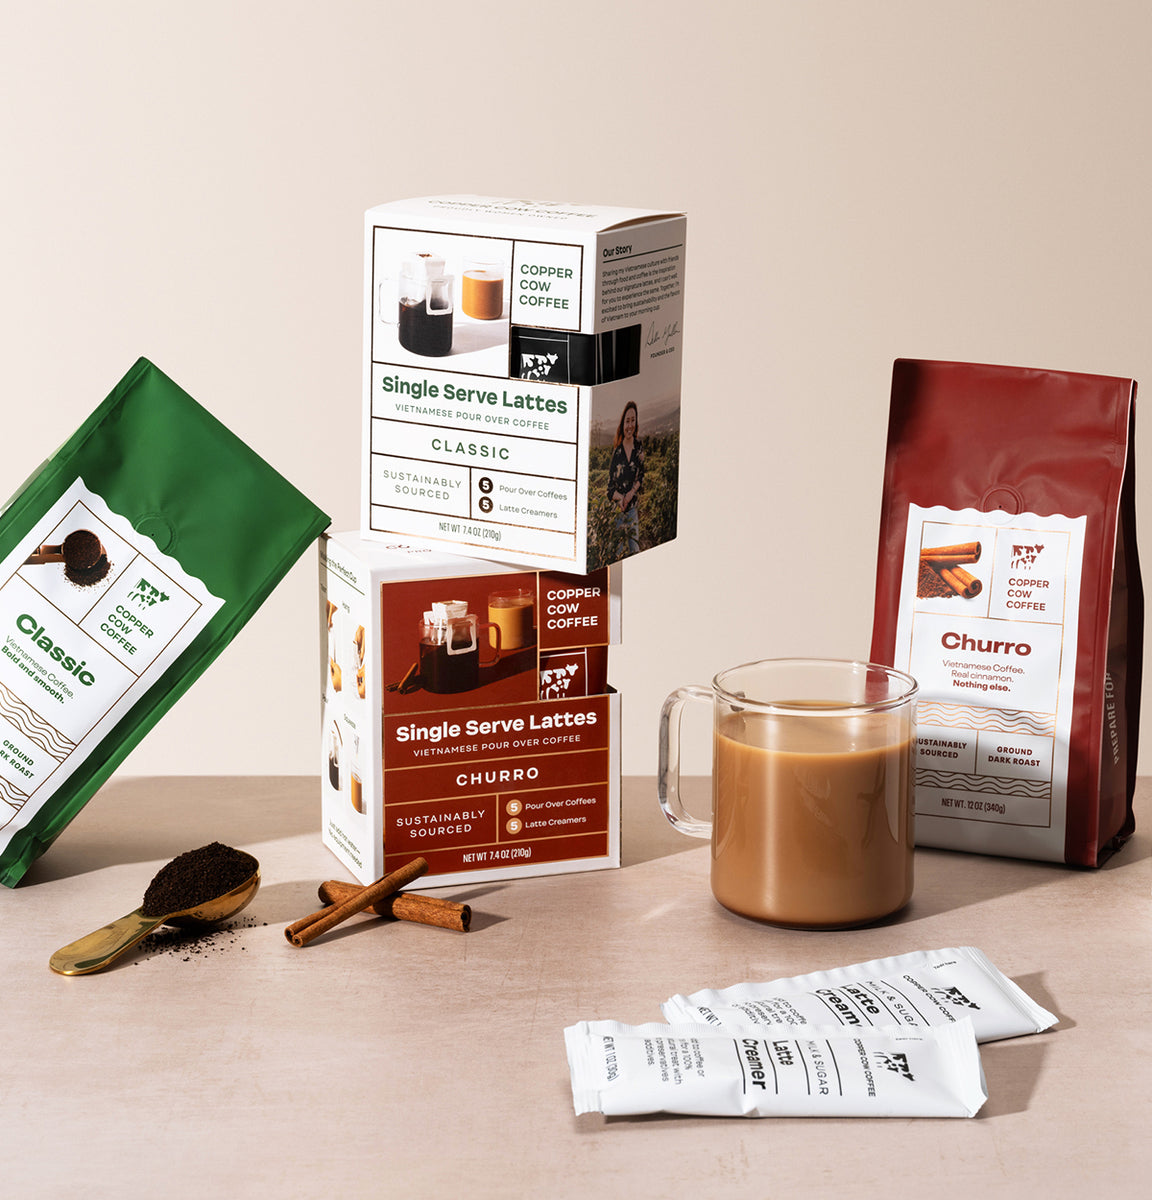 Tea Drops & Copper Cow Chai Spice Latte Kit - World Market